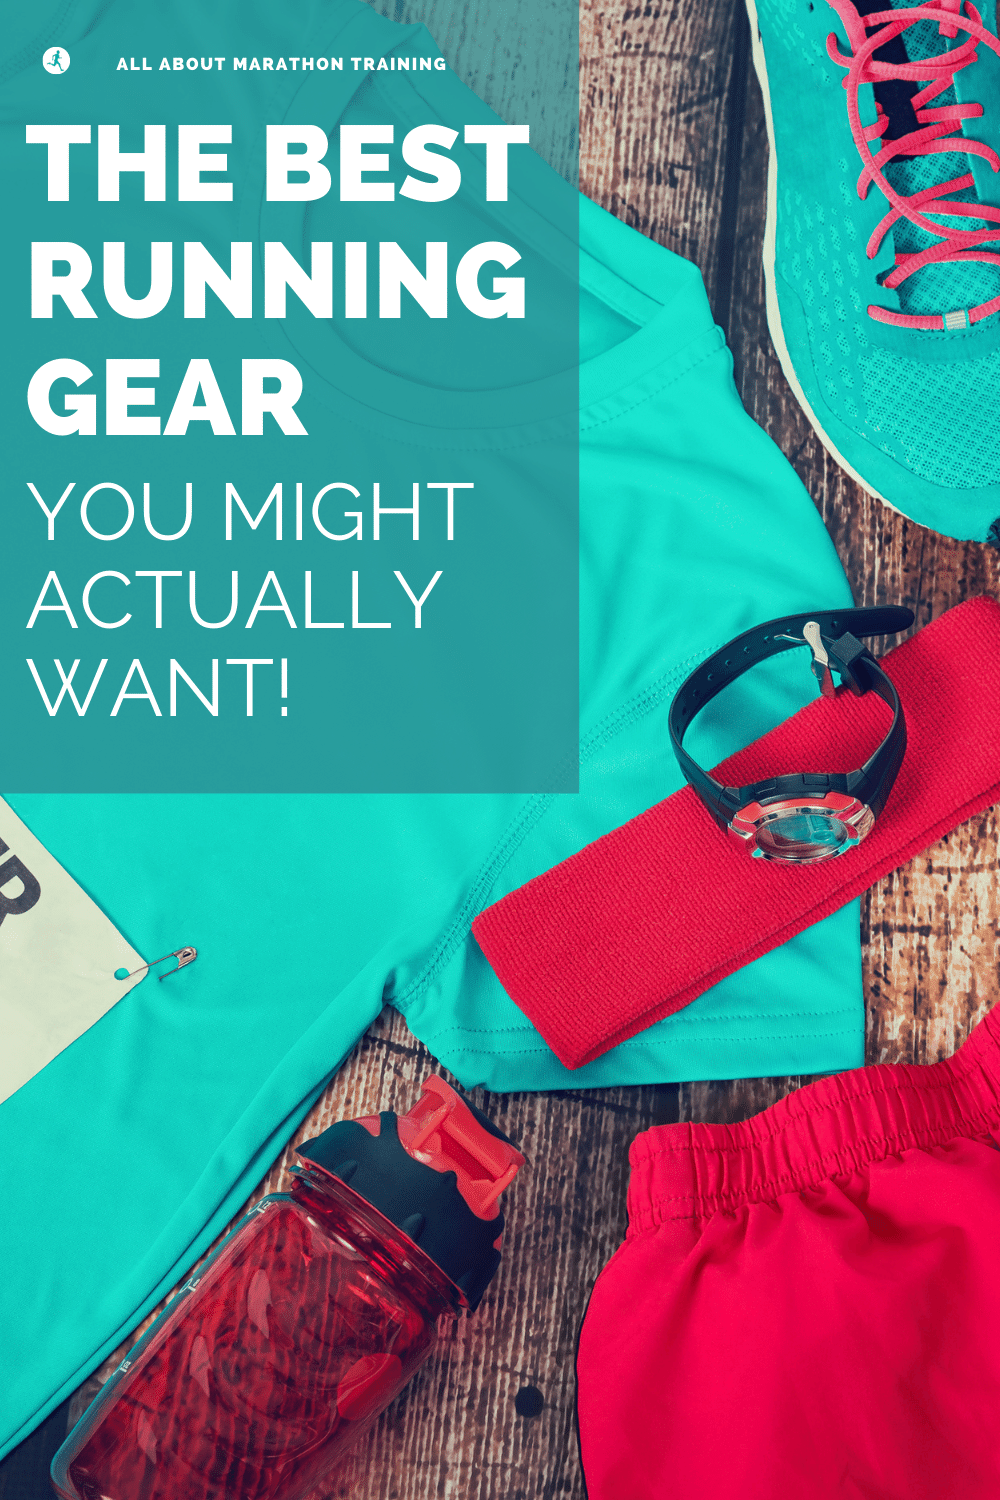 Beginners' Running Kit: What you actually need to start running